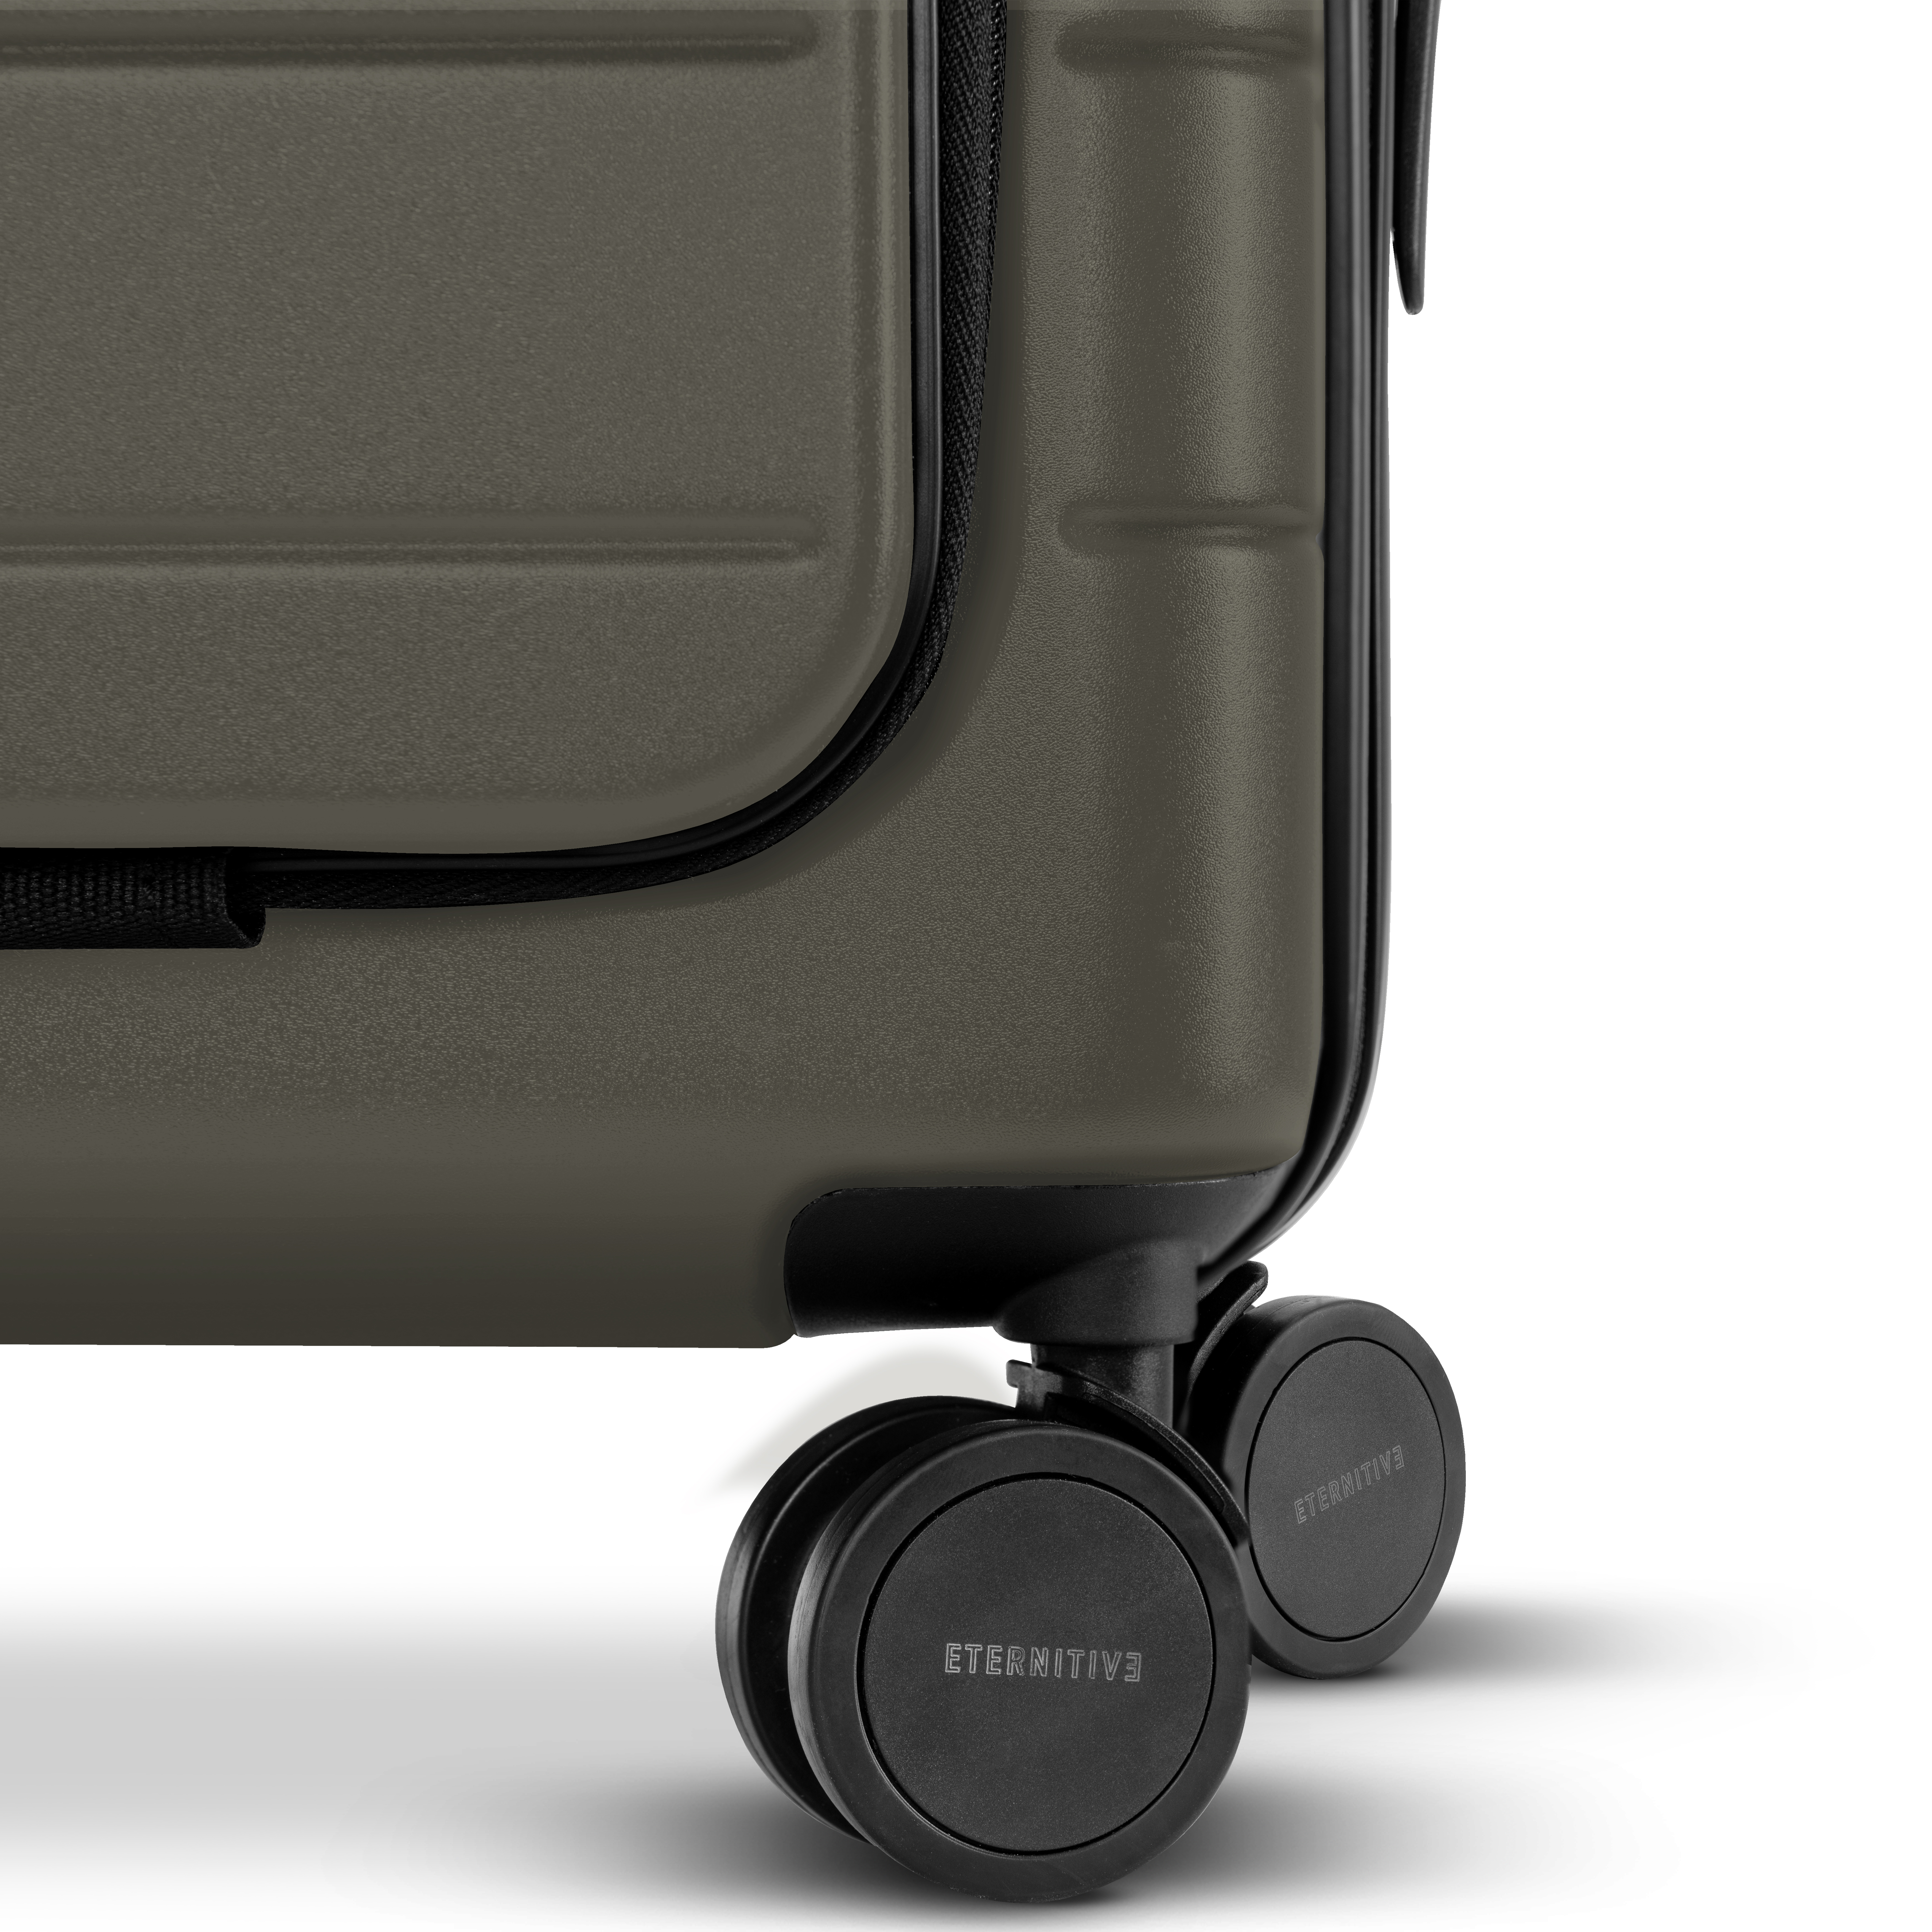 E3 Koffer set 2 teilig: \n Handgepäck + Mittelgroßer Koffer Olivgrün